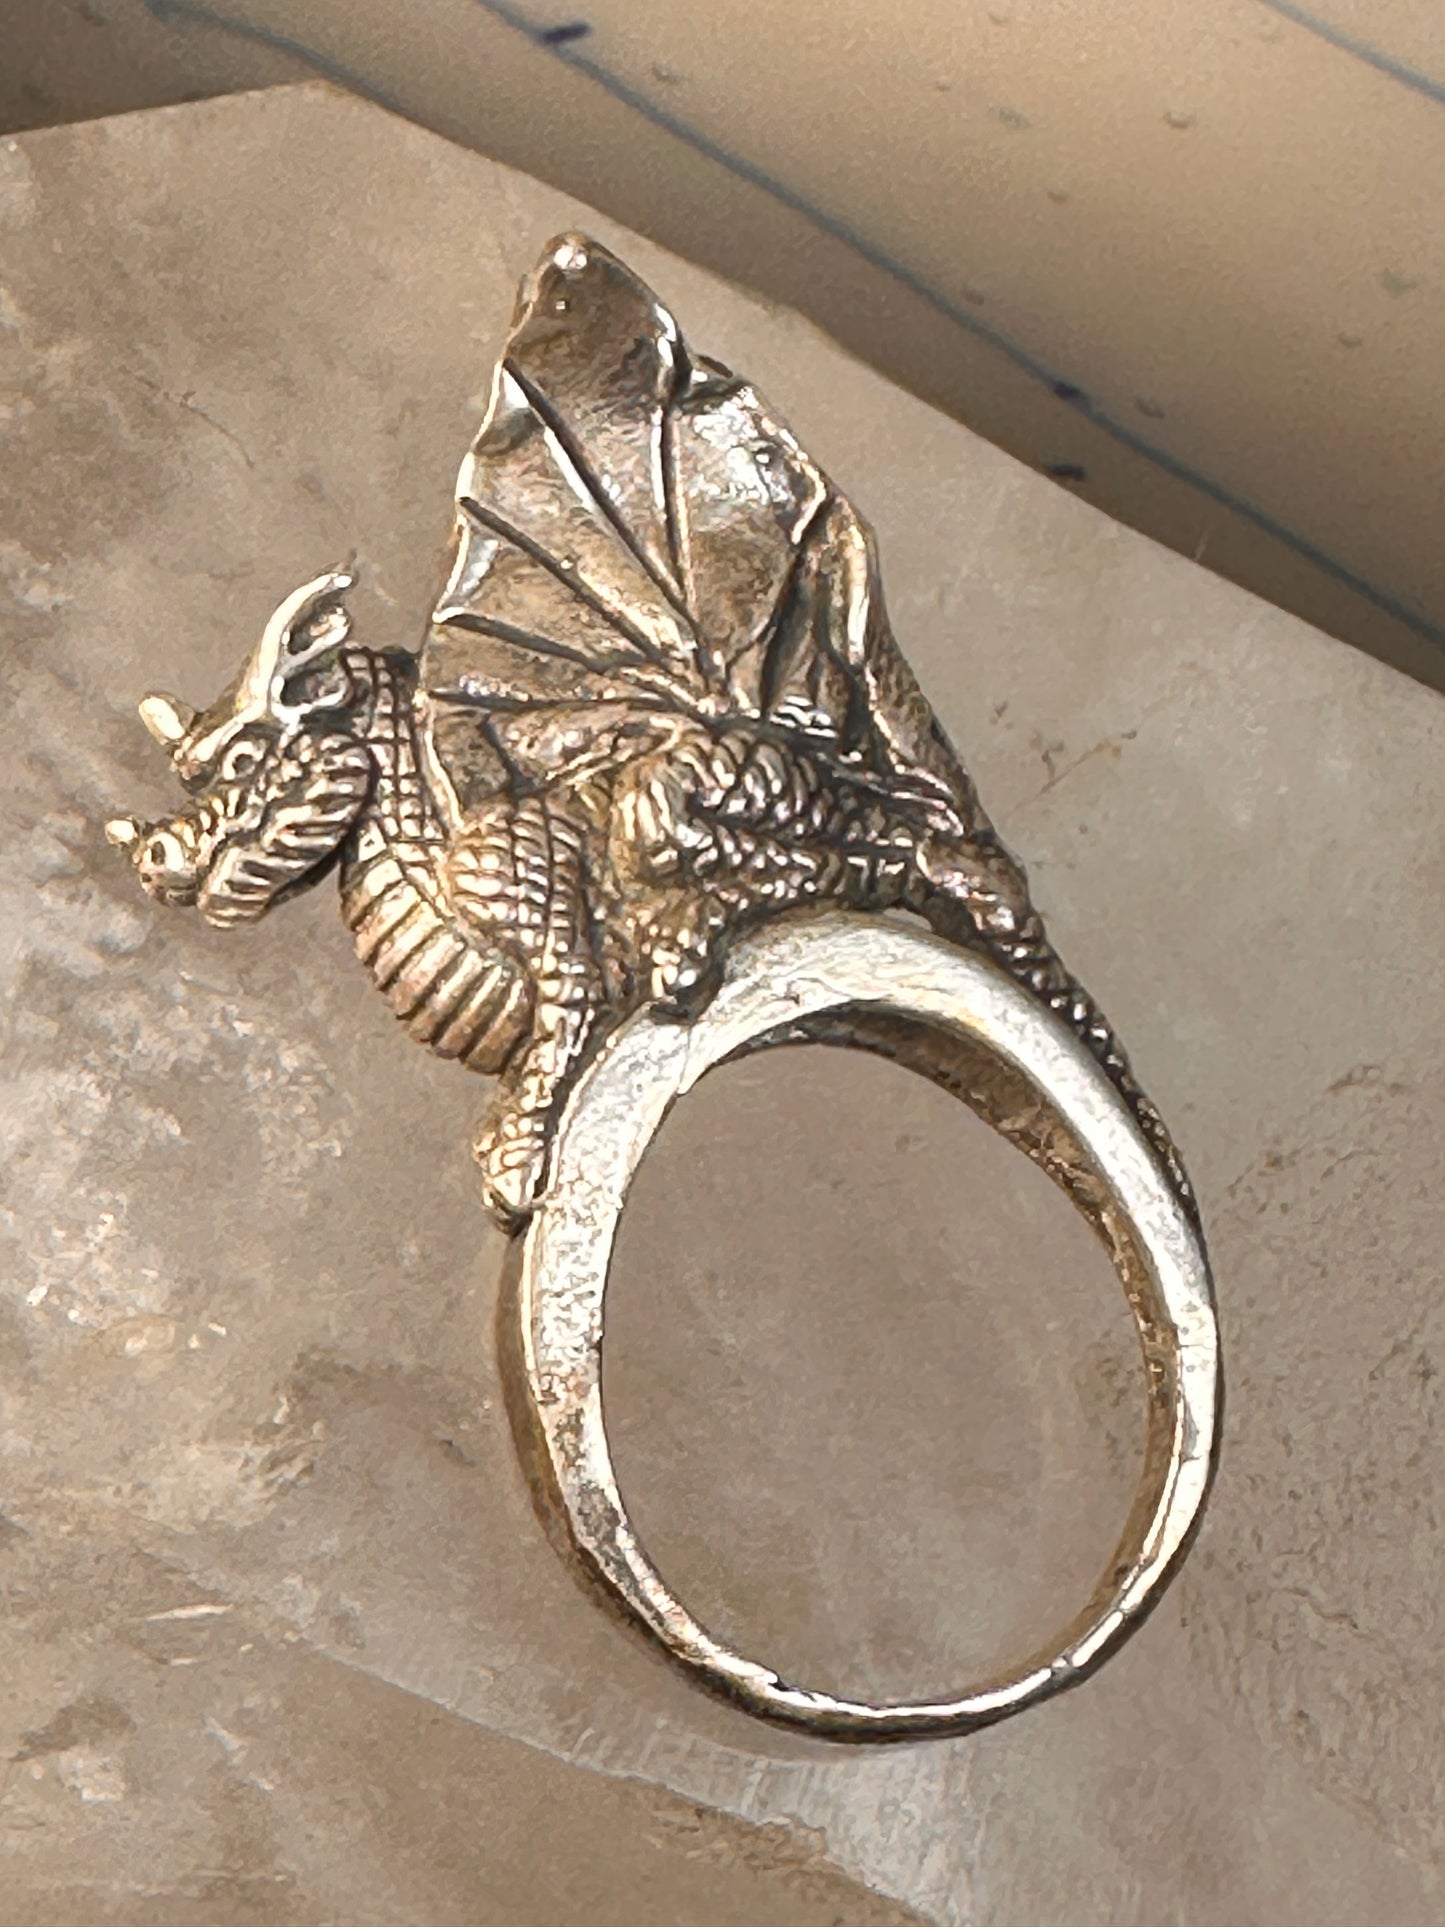 Dragon ring detailed band size 9.50 sterling silver women men